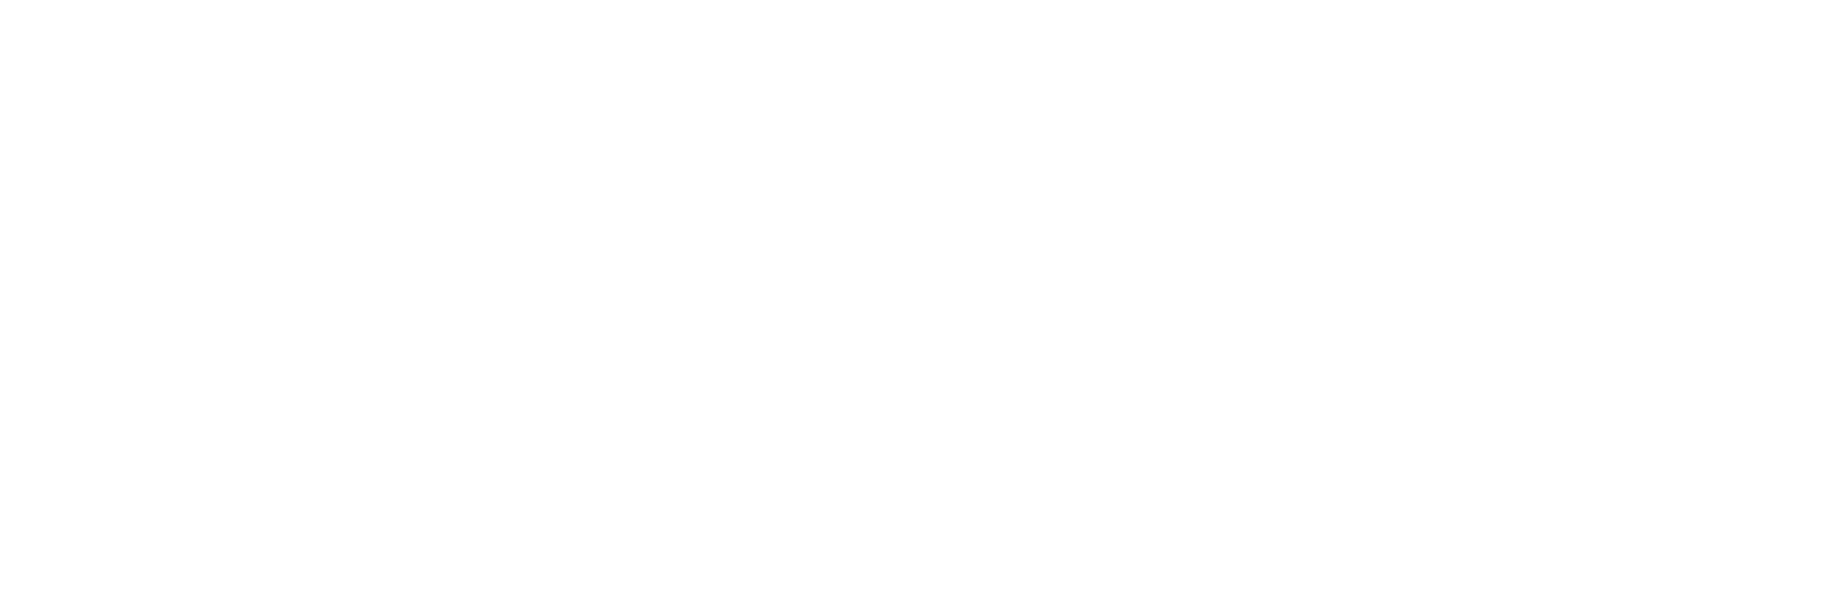 Logo CYLAZ Créations blanc